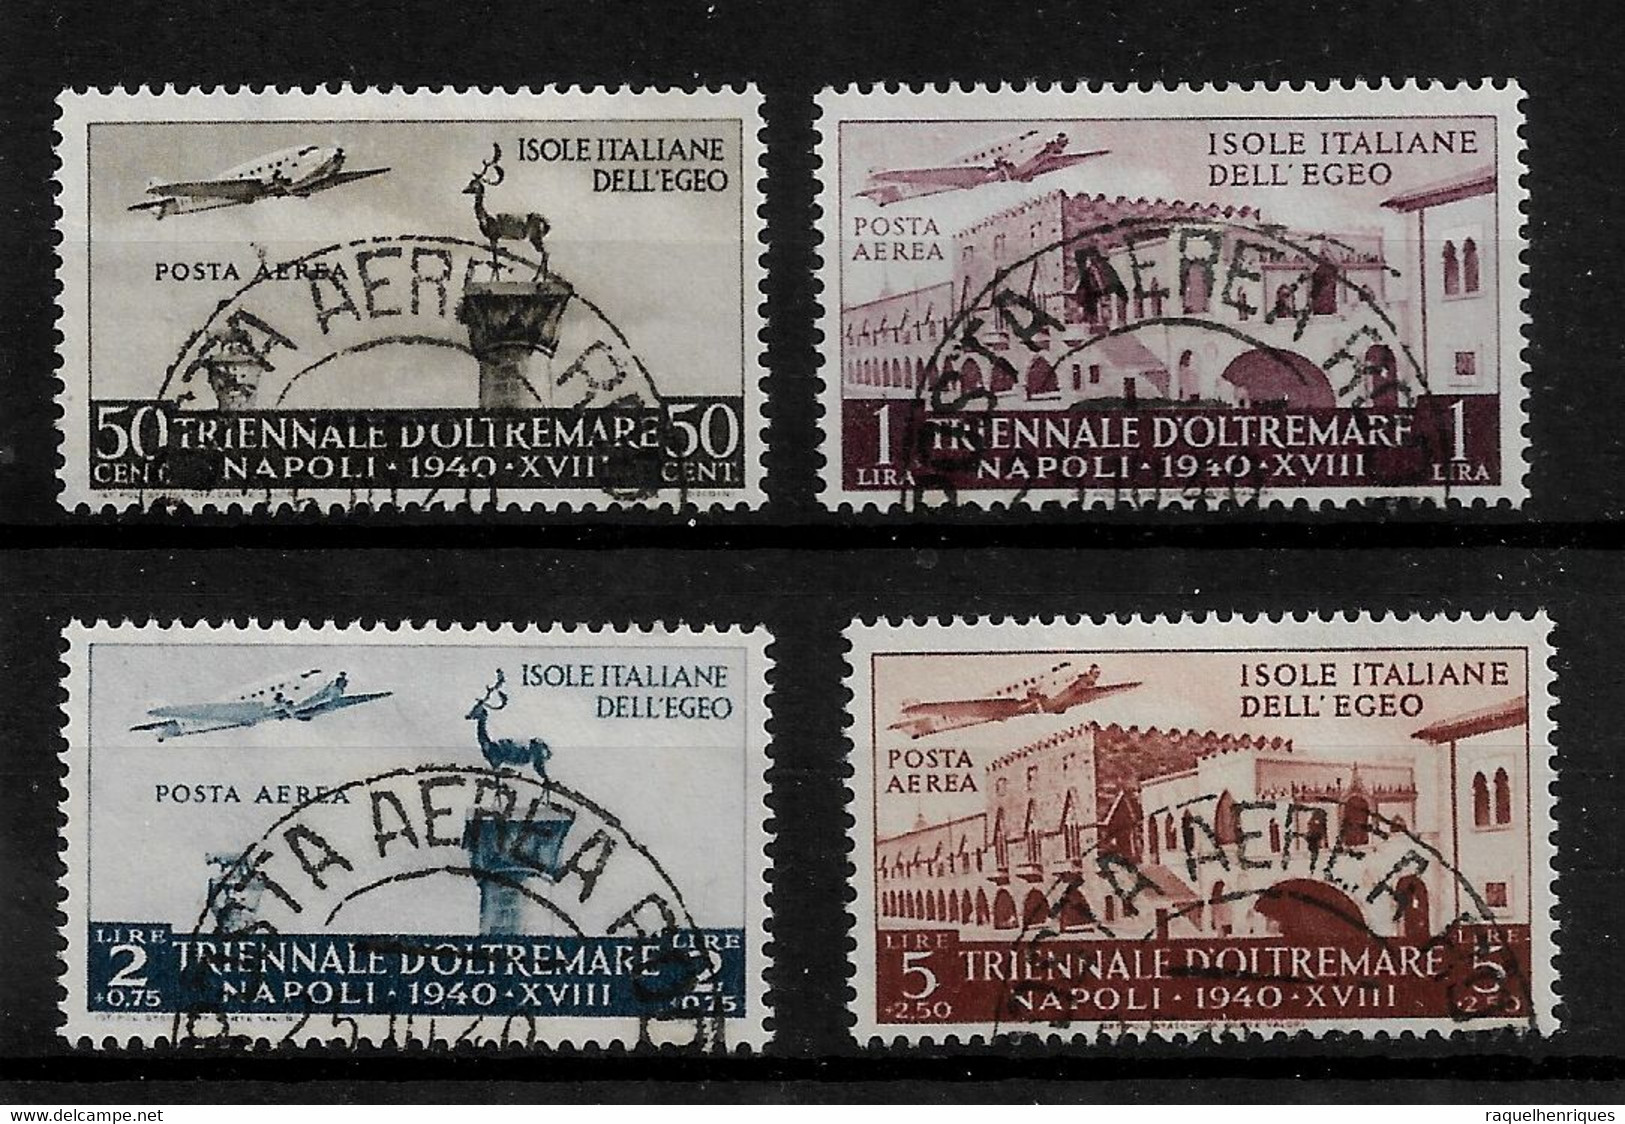 ITALY STAMP - AEGEAN ISLANDS - 1940 Airmail - Exhibition In Napoli SET USED (BA5#88) - Egeo (Adm. Autónoma)